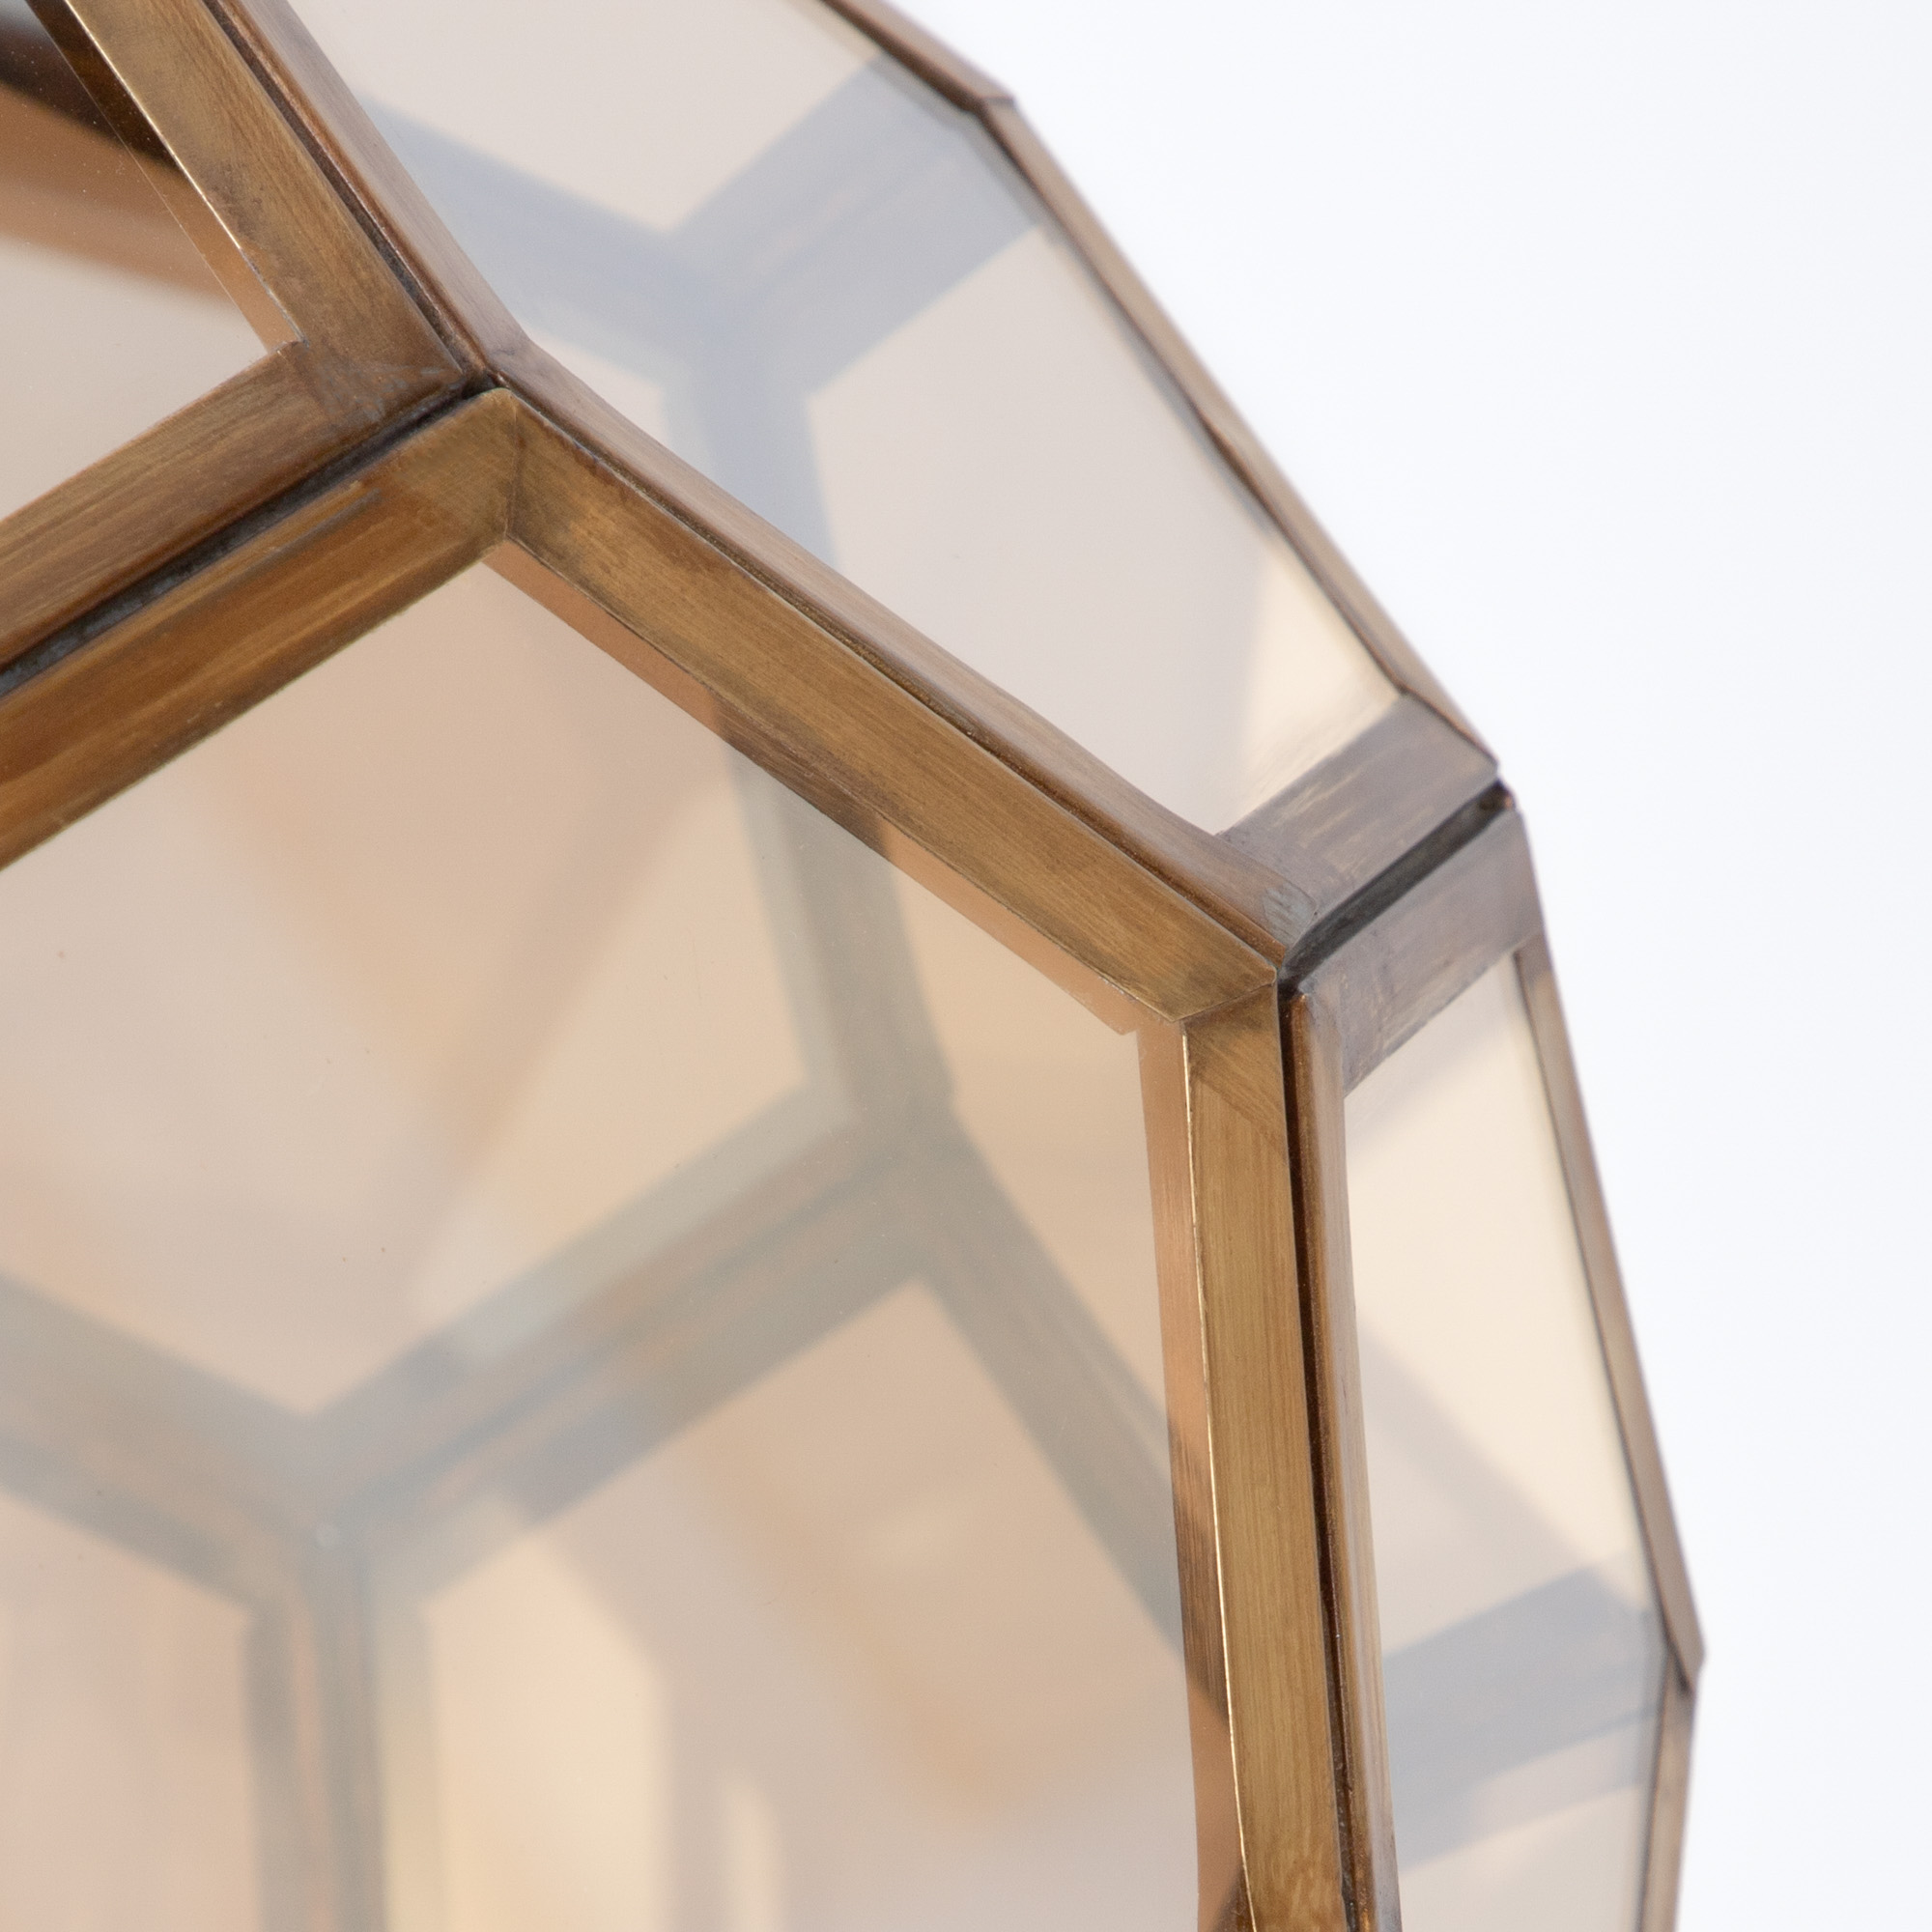 Sienna Metal and Vintage Glass Pendant Lamp